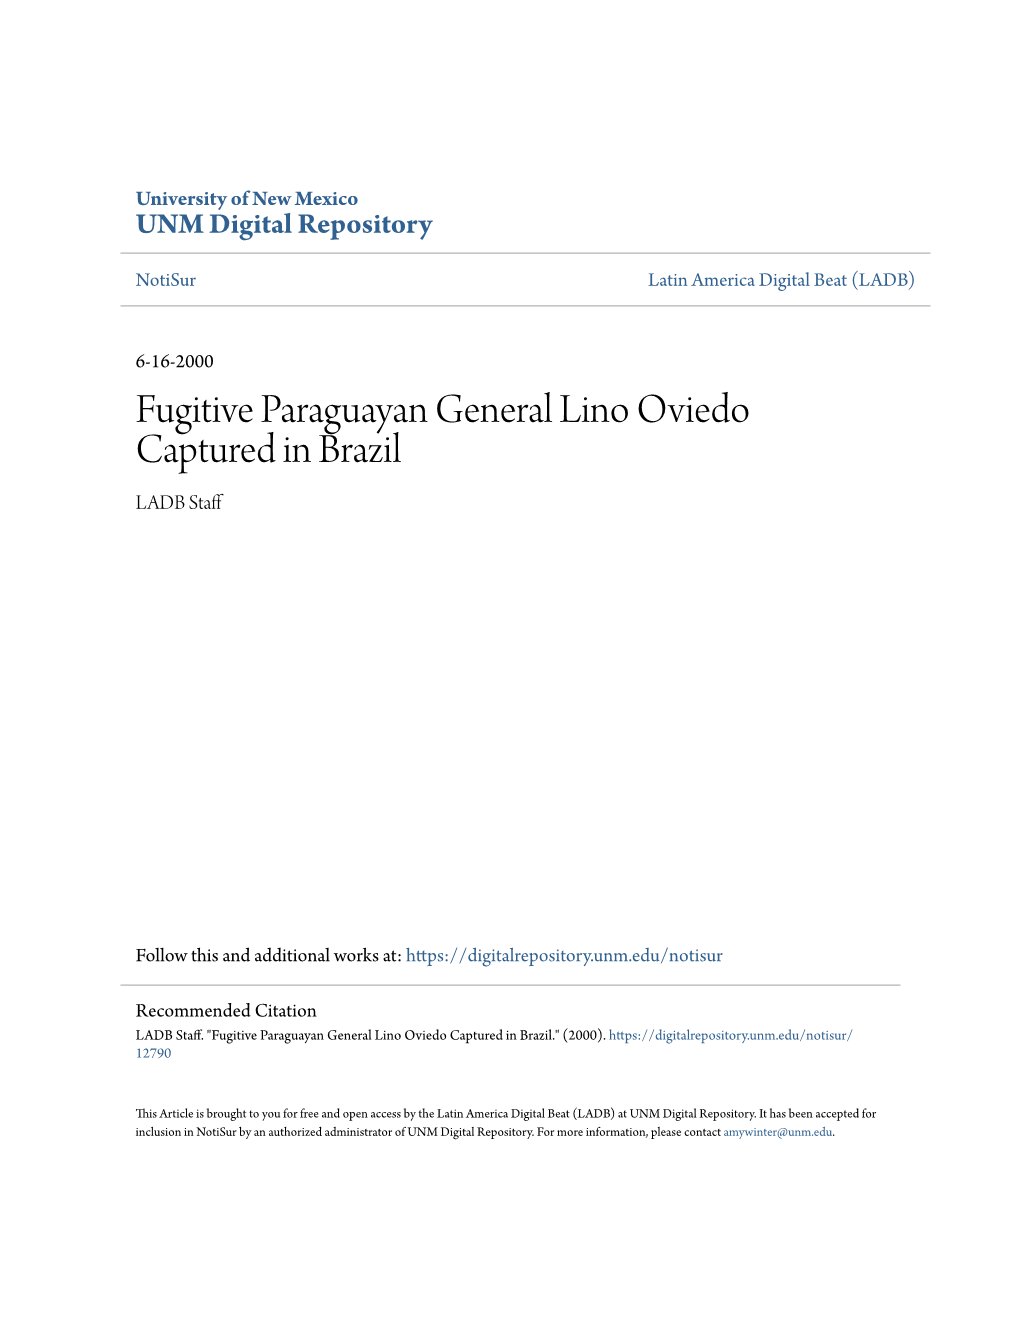 Fugitive Paraguayan General Lino Oviedo Captured in Brazil LADB Staff